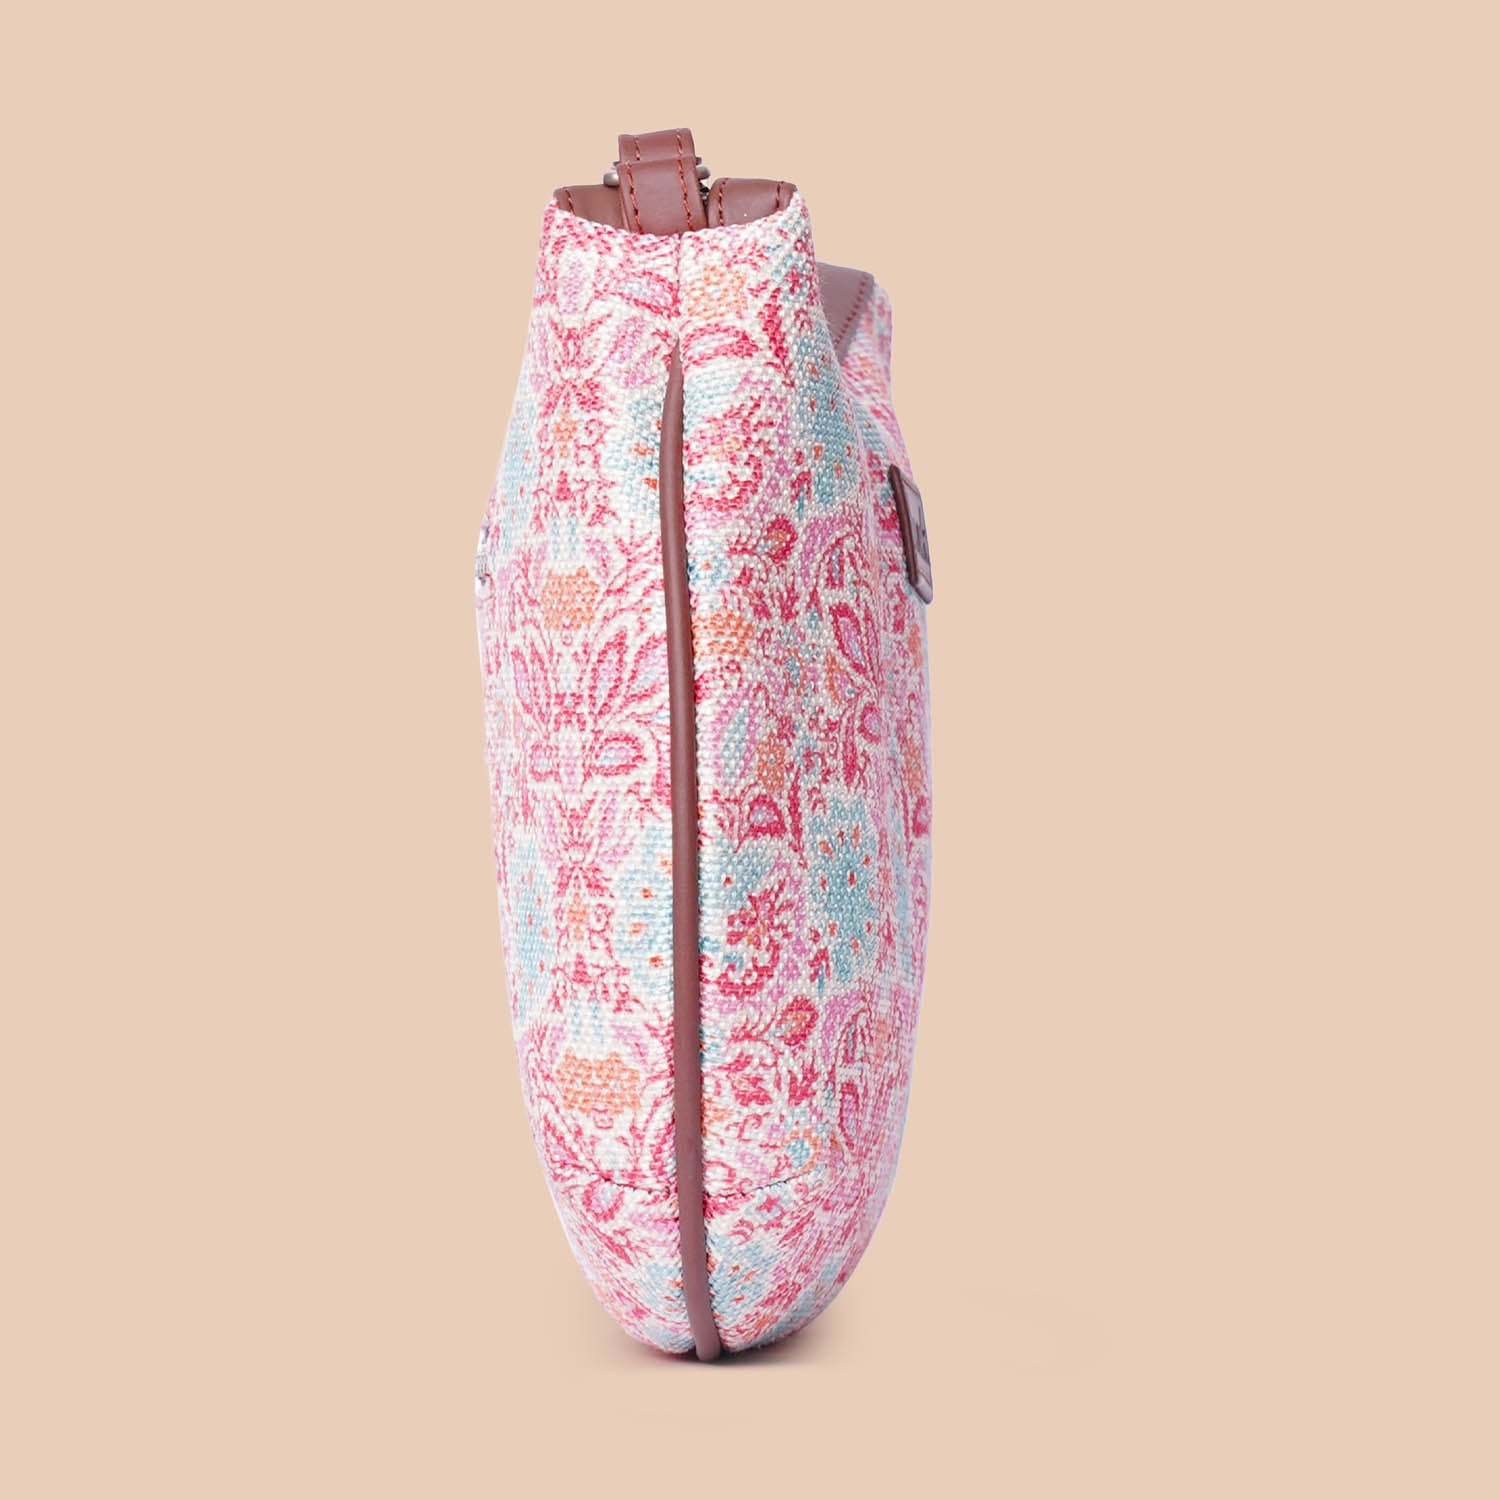 Mangalore Blossoms Structured Shoulder Bag